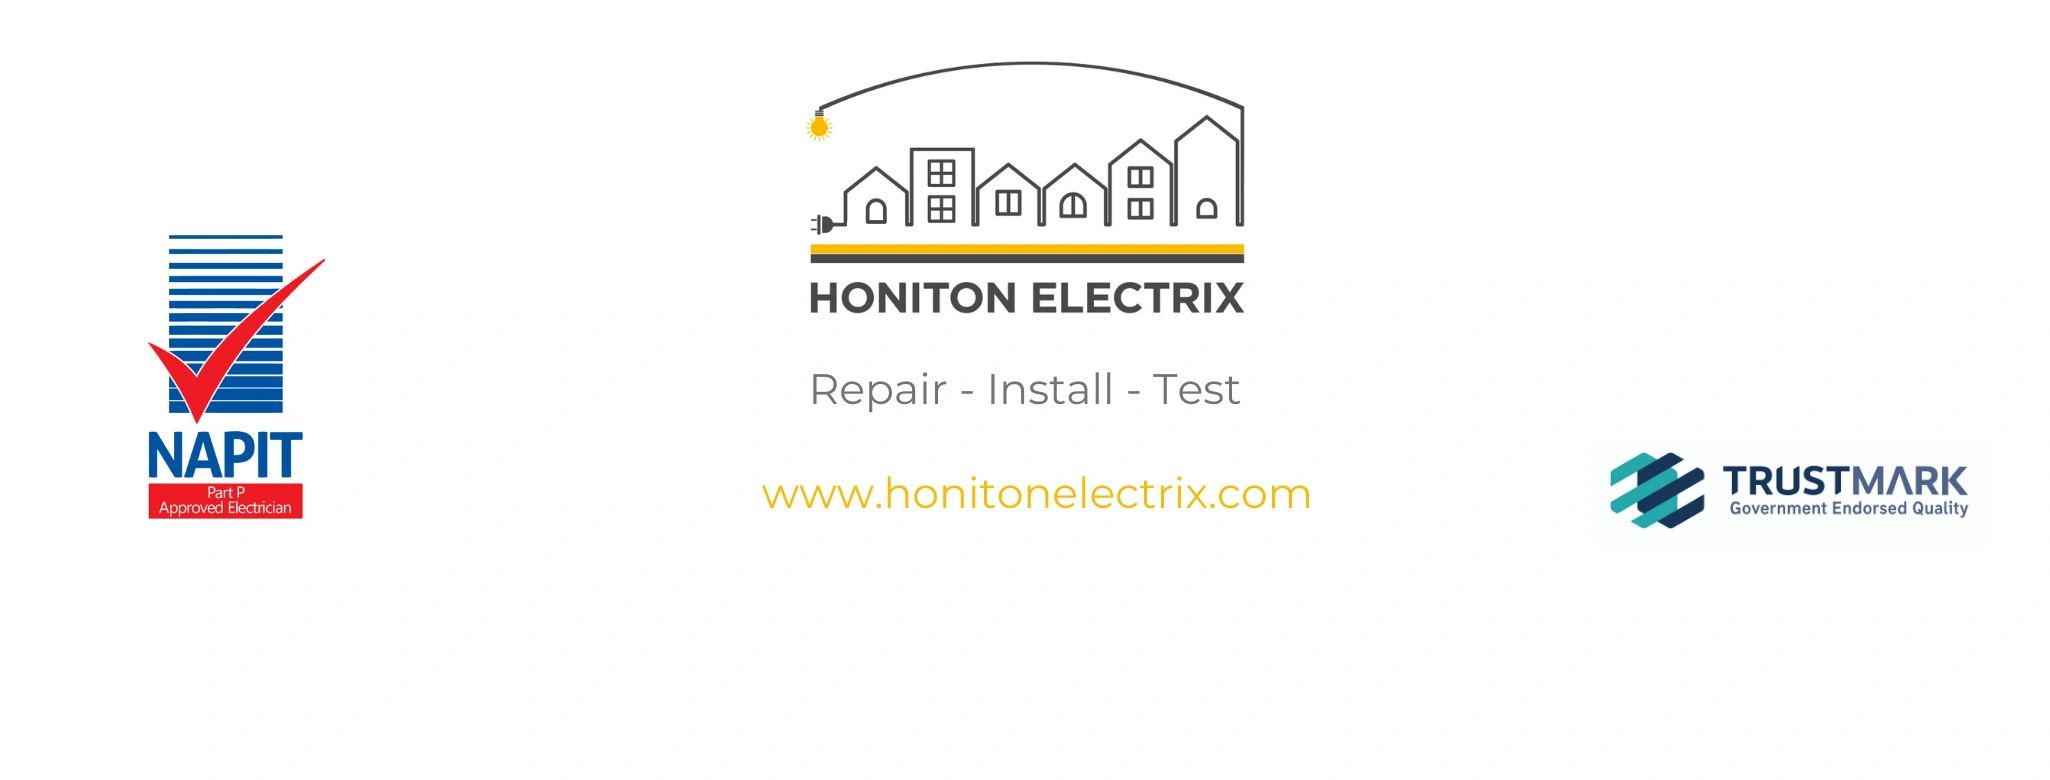 Honiton electrician
Electrician in Honiton
East Devon electrician
Approved electrician
NAPIT 